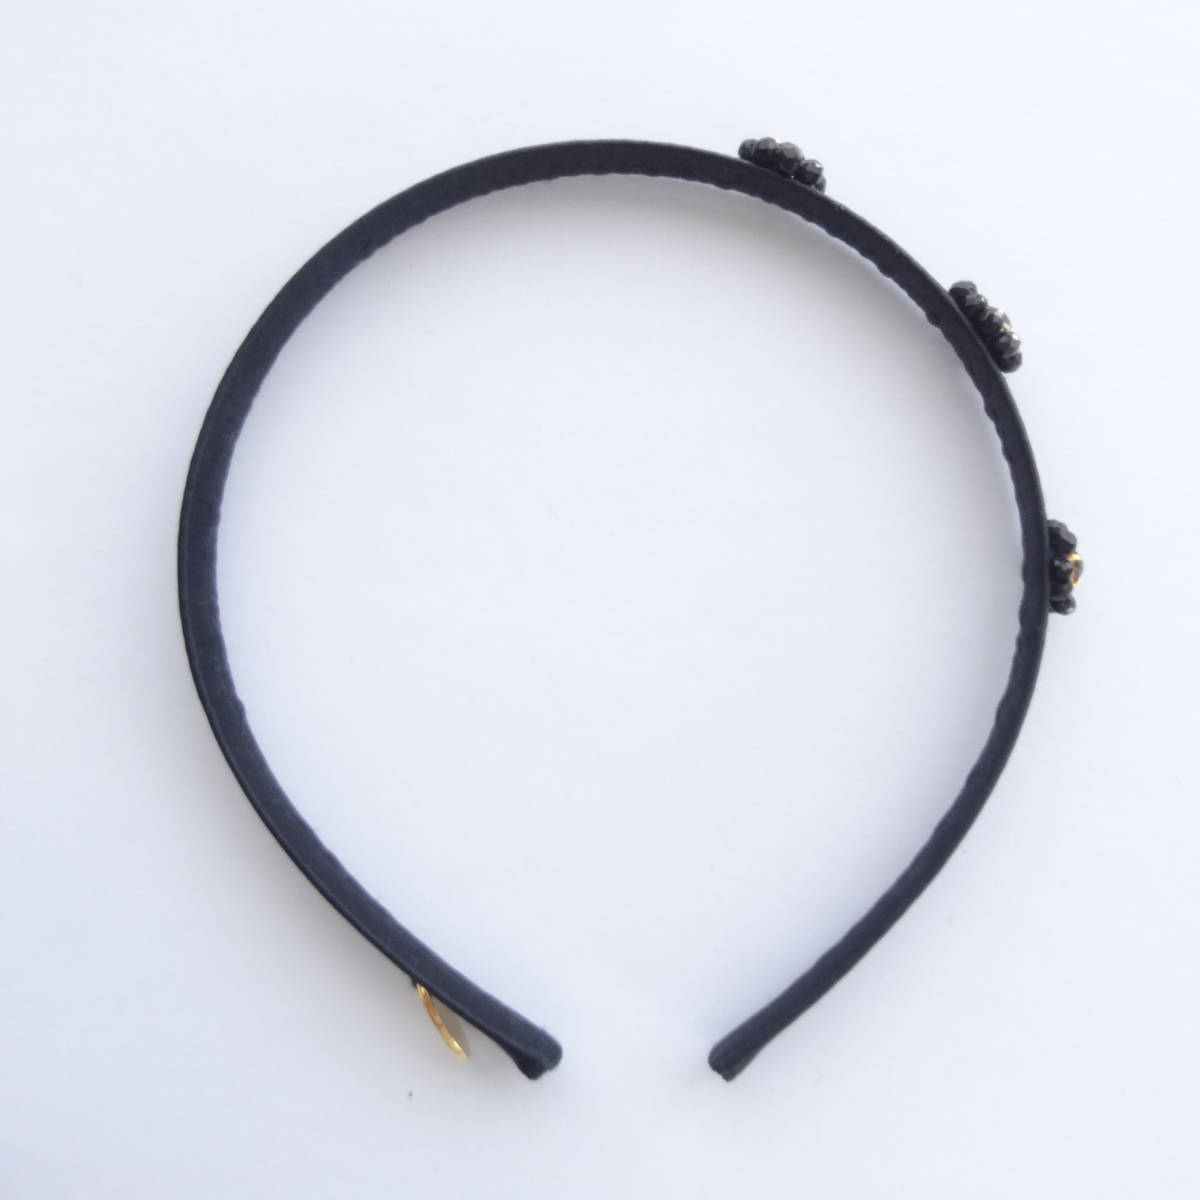 BEAMS* Aqua Girl buy hair elastic | Katyusha summarize 4 piece set black series Gold pipe biju- Swarovski equipment ornament 